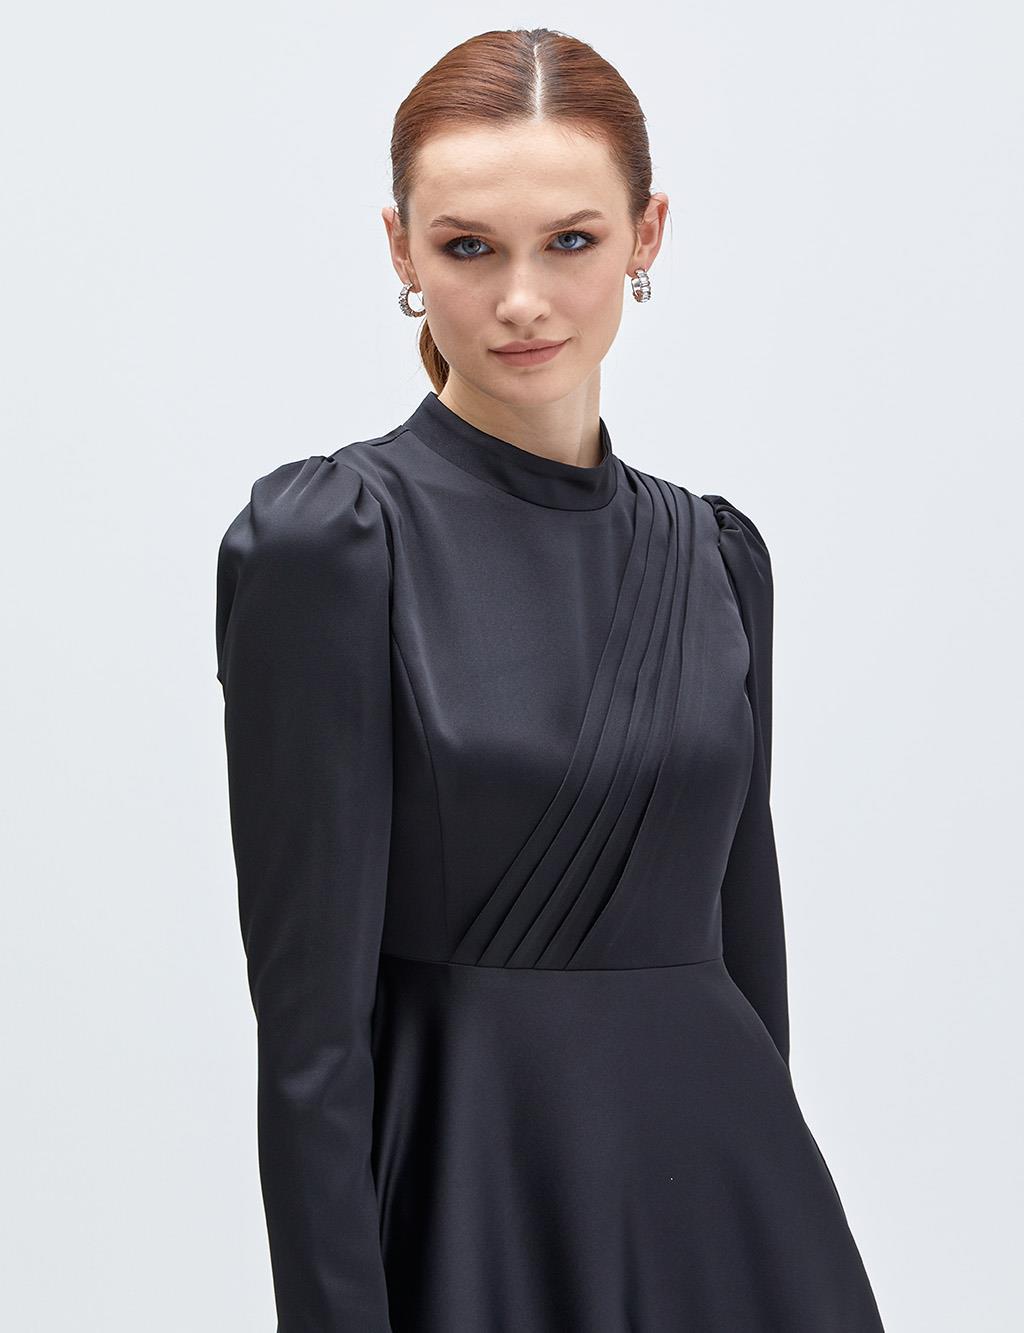 Black Collar Dress With Flowy Skirt Black